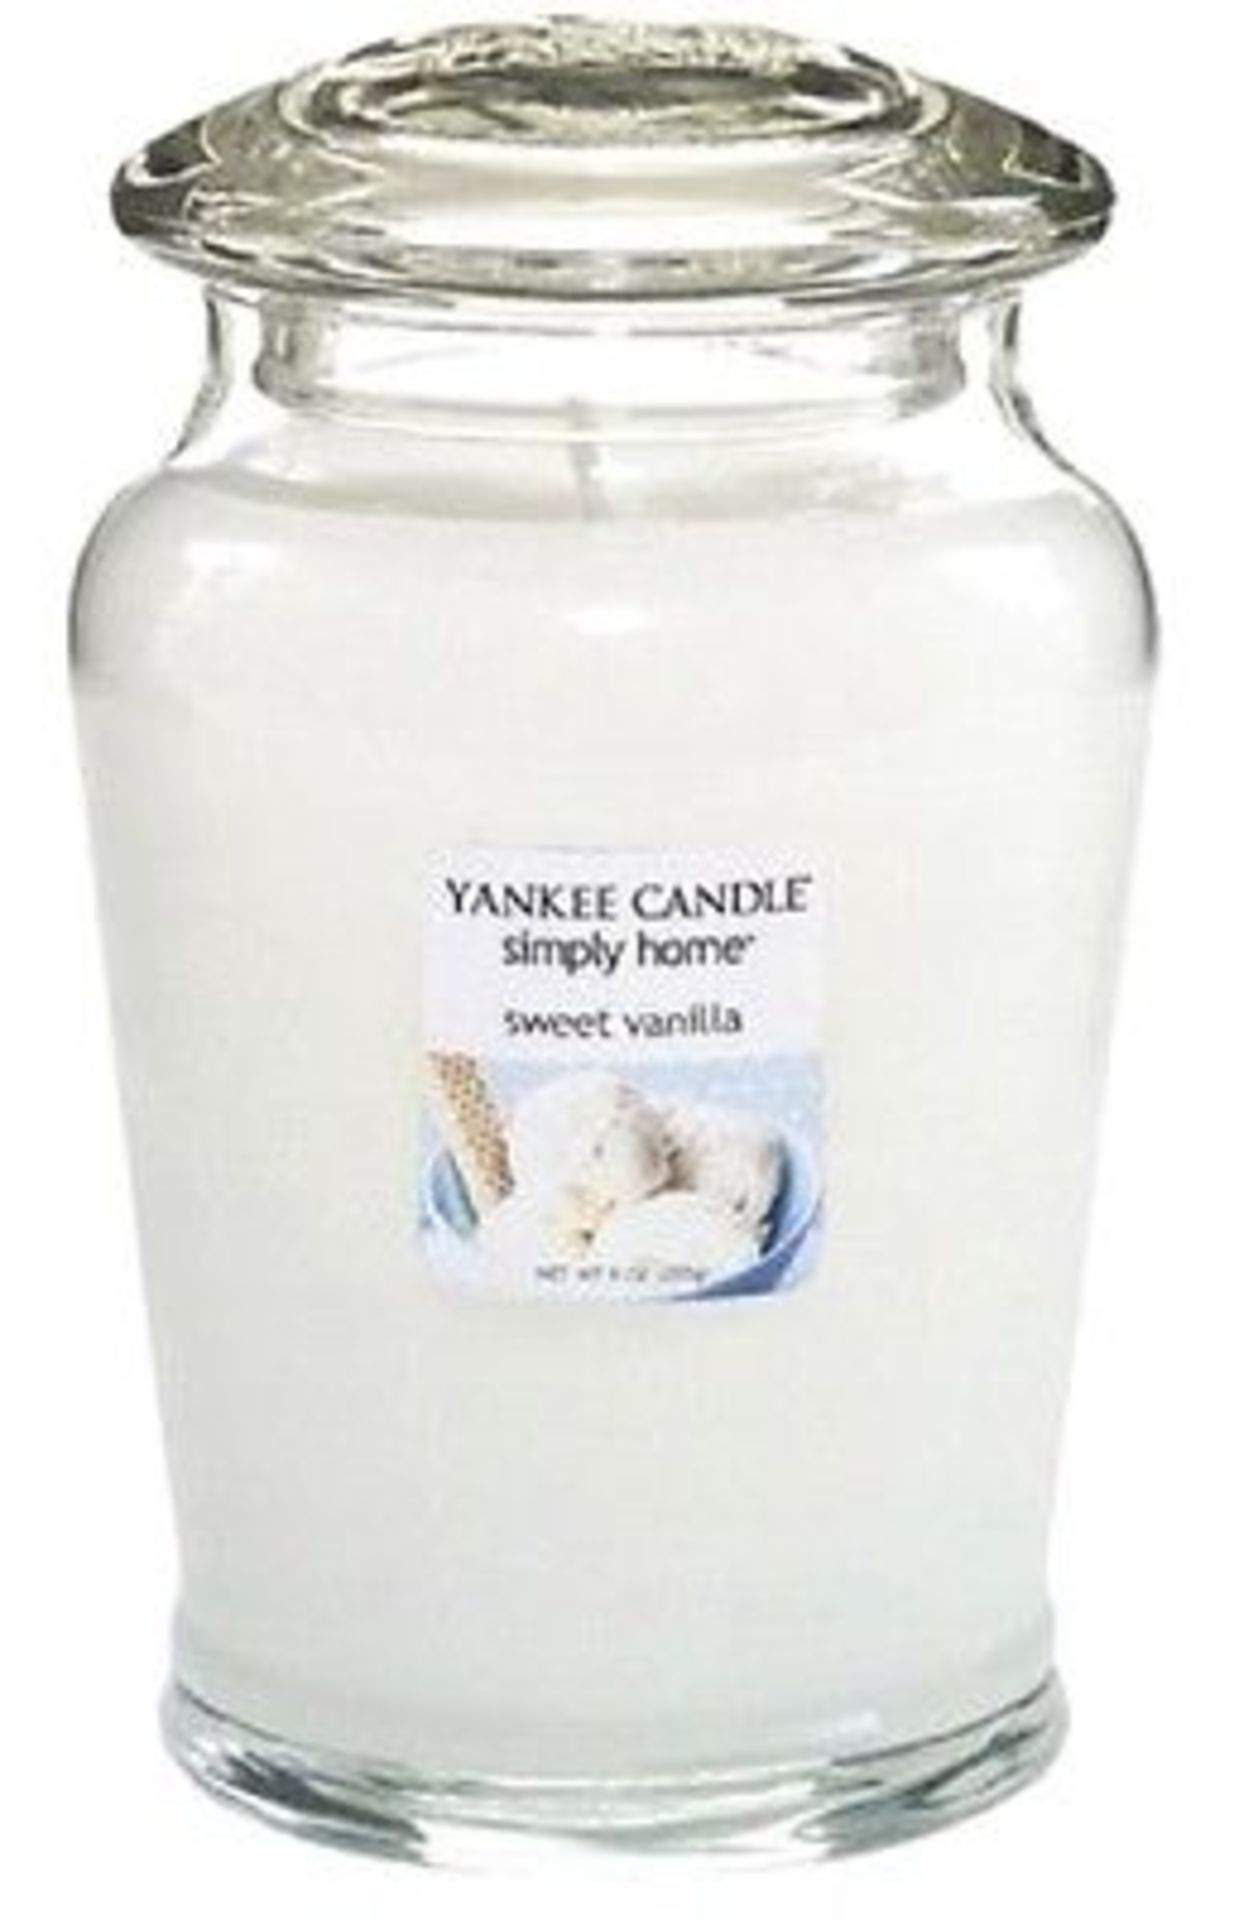 V *TRADE QTY* Brand New Yankee Candle Jar Medium Sweet Vanilla 12oz Internet Price £10.99 X 60